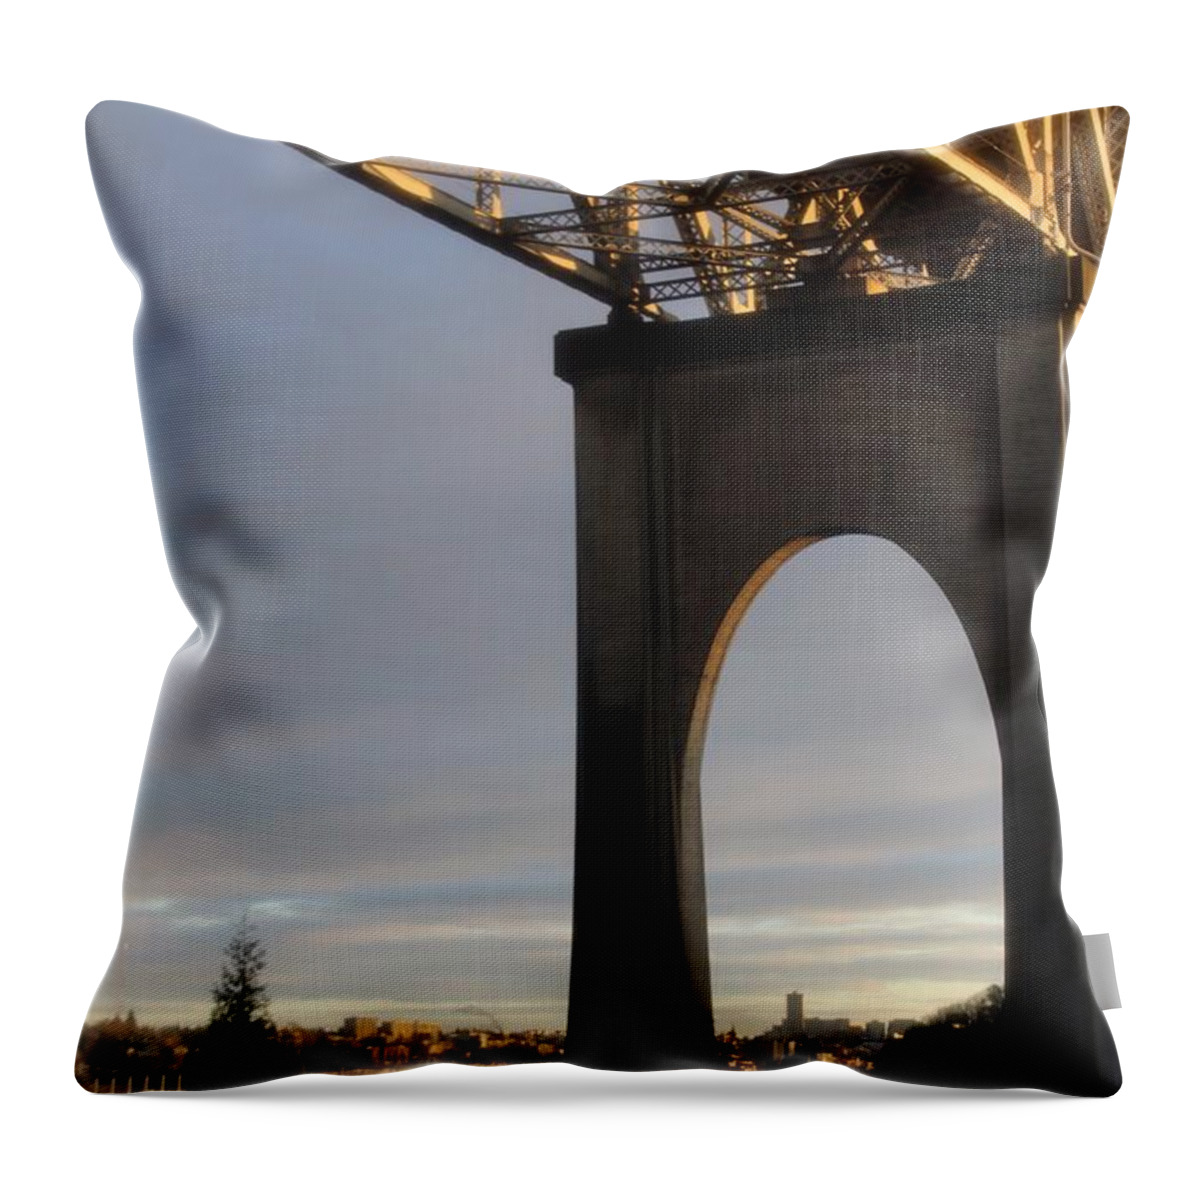 Fremont Throw Pillow featuring the photograph Aurora Bridge Seattle Washington by Suzanne Lorenz